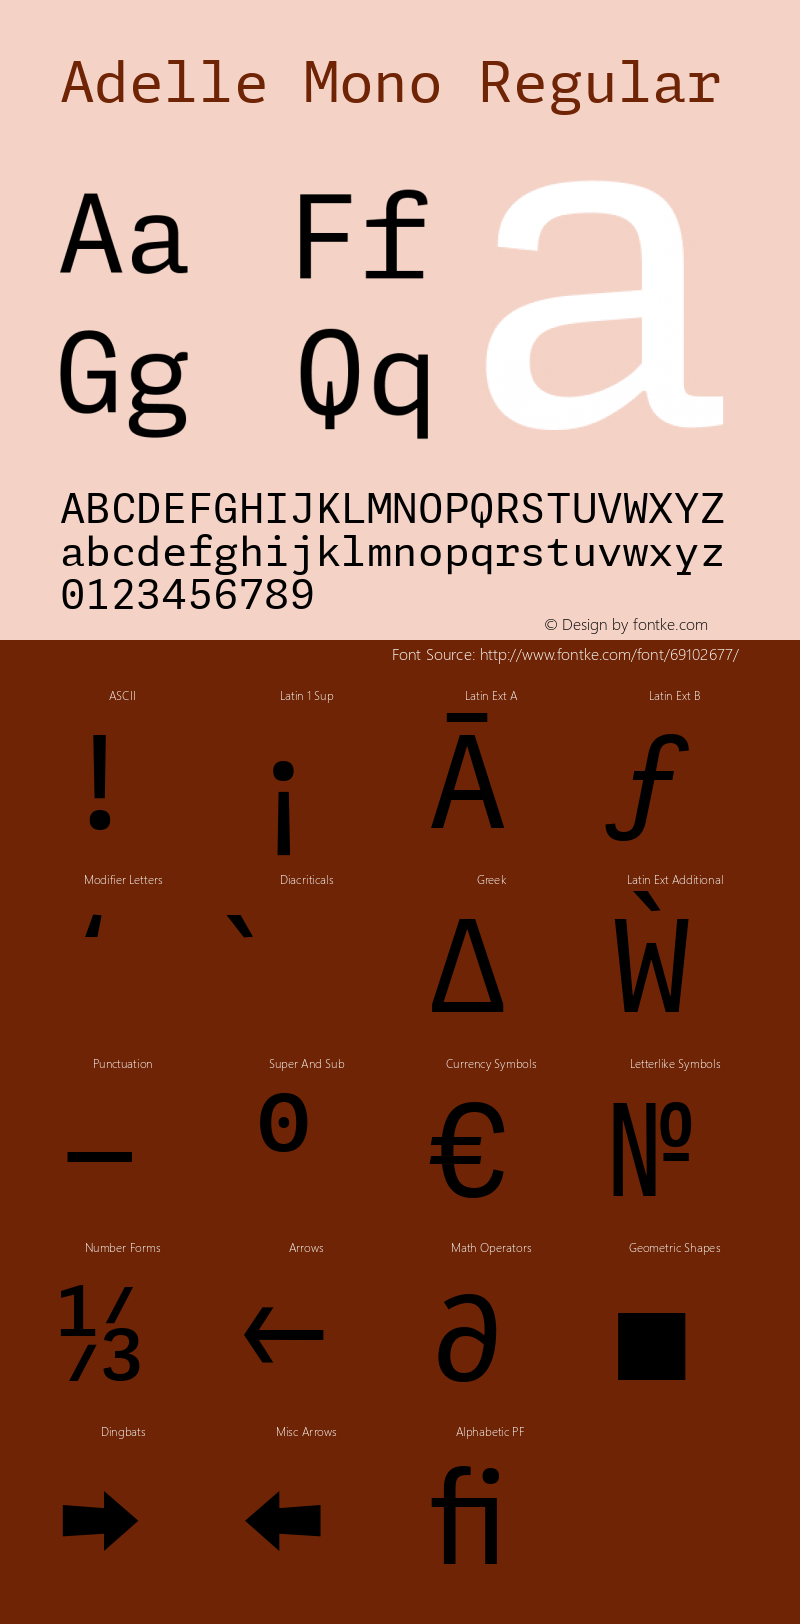 Adelle Mono Version 1.001;hotconv 1.0.114;makeotfexe 2.5.65599 Font Sample